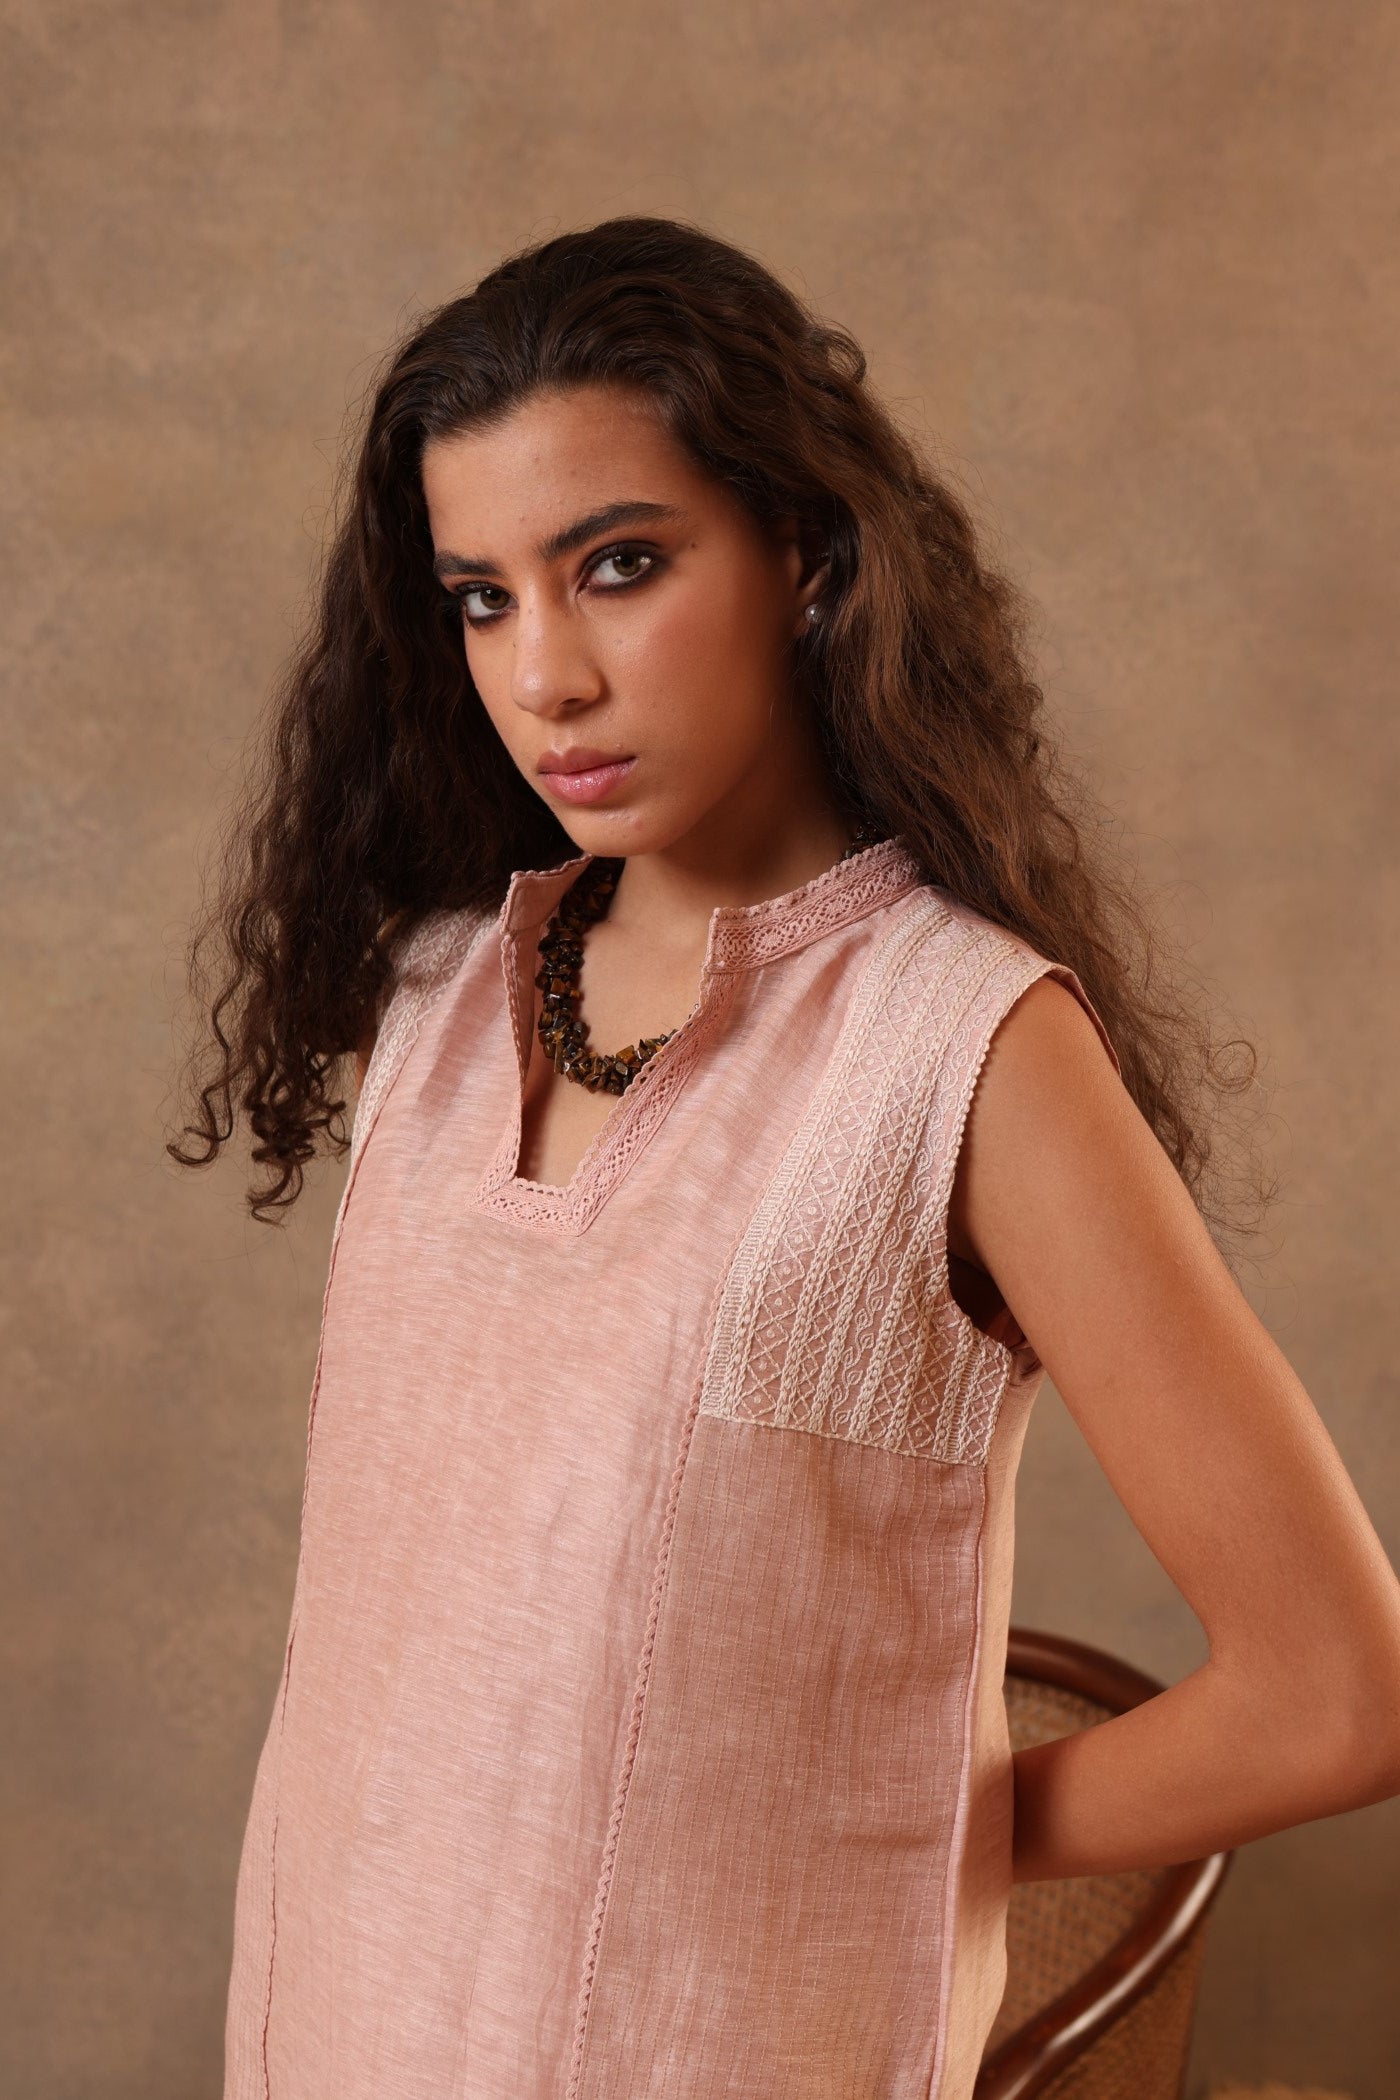 Dusty-Pink Hand-Embroidered (Geometric Design) Pure Linen-Silk Sleeveless Short Blouse